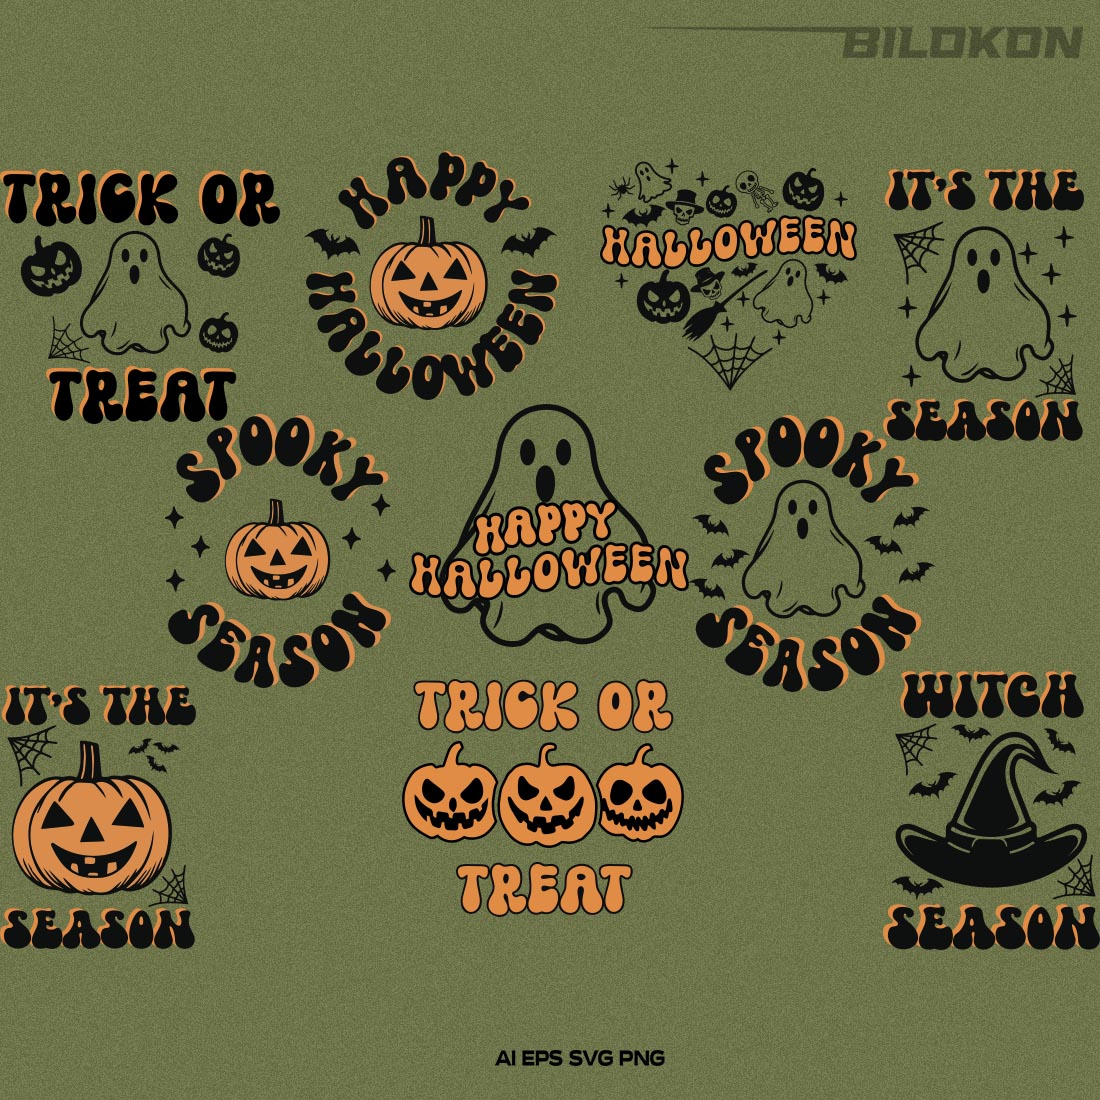 Happy Halloween Design SVG Bundle, Halloween SVG Cut File cover image.